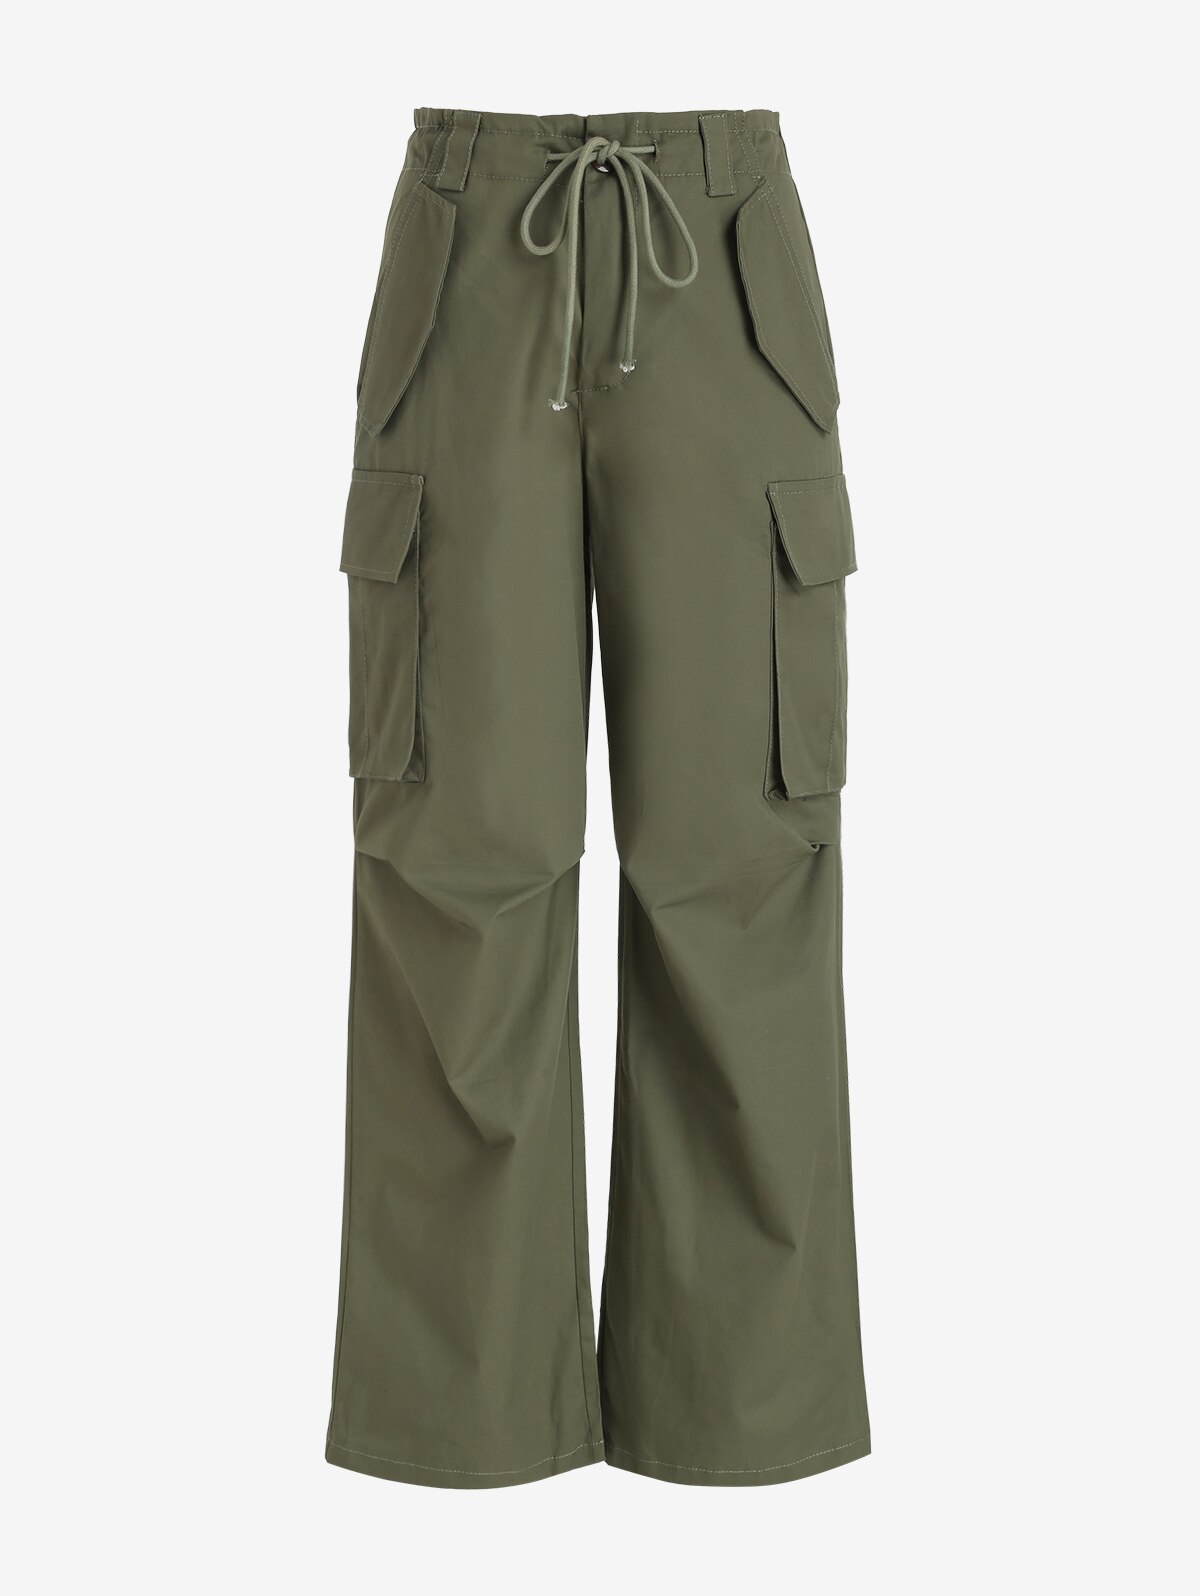 ZAFUL Pockets Drawstring Straight Cargo Pants Women Solid Parachute Trousers Y2K Fashion Streetwear pantalones de mujer 1 - Parachute Pant Shop